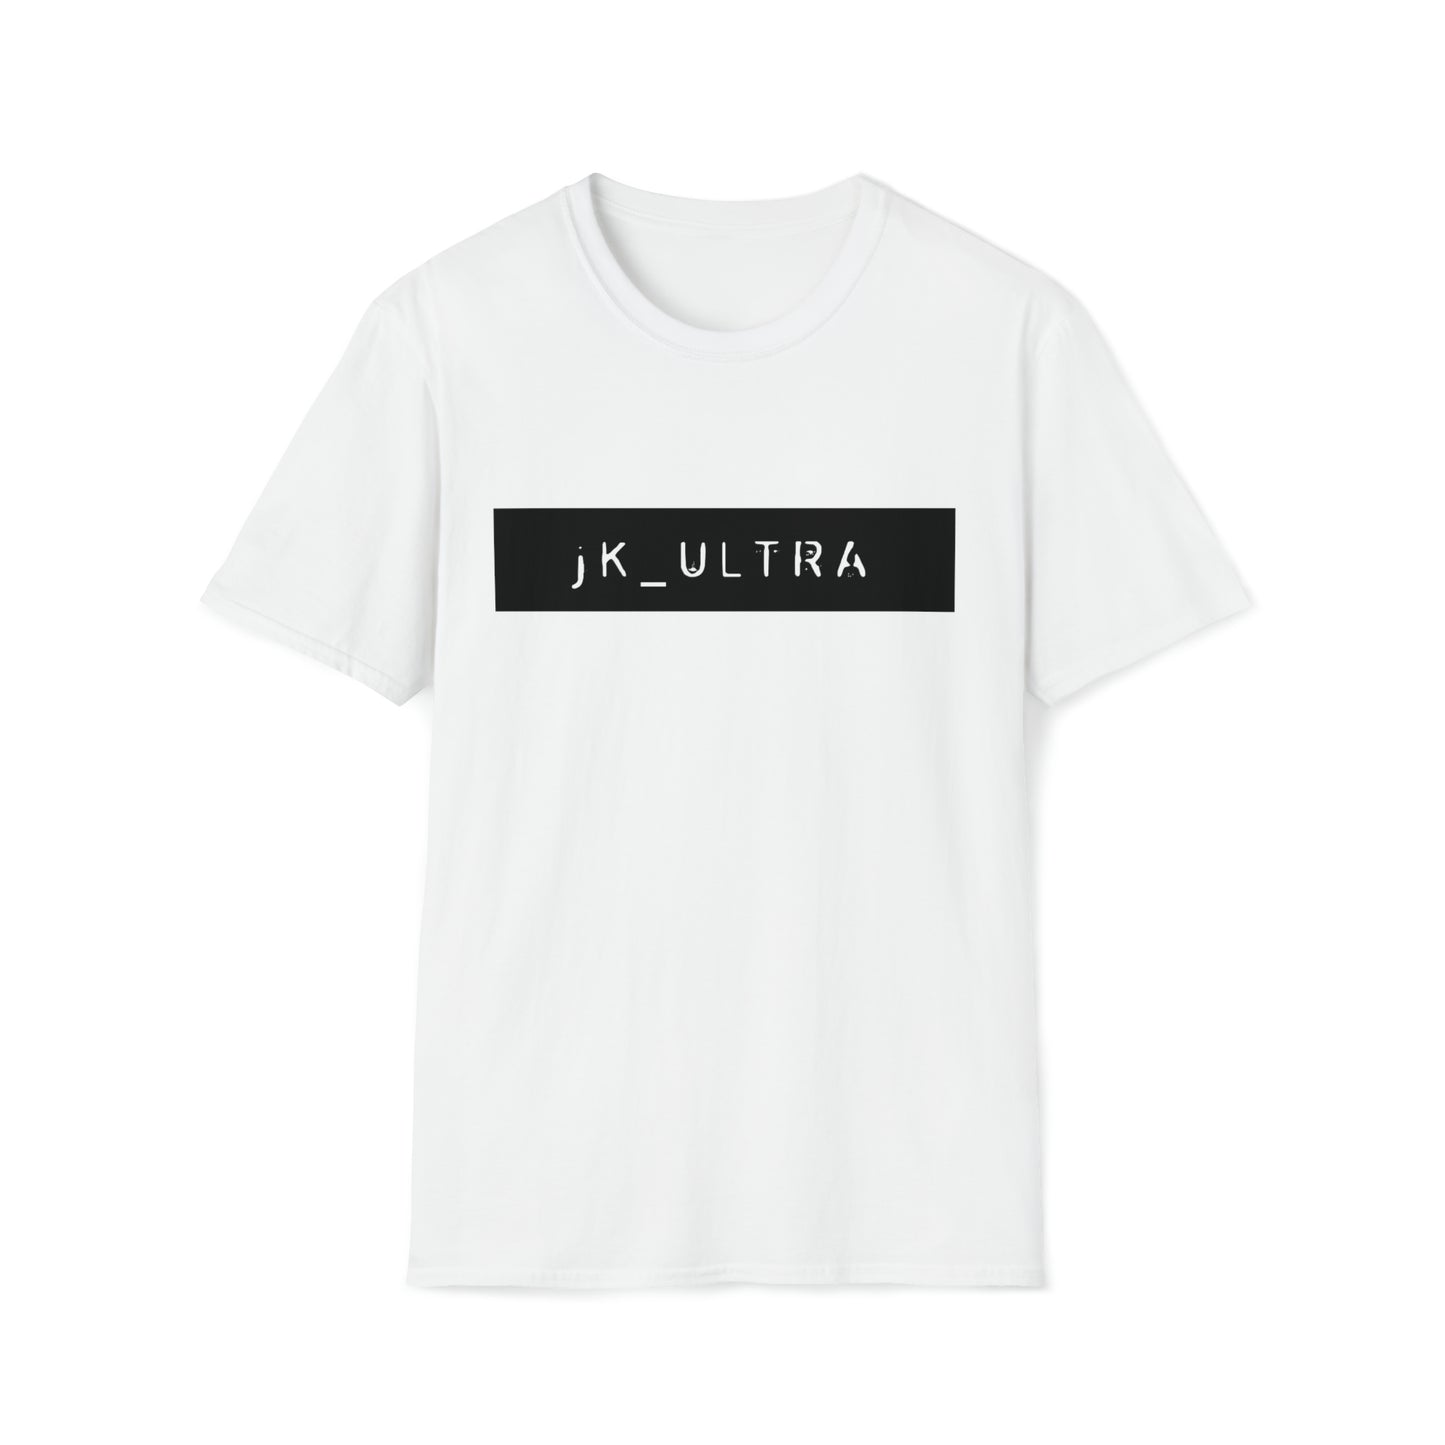 jk_ultra  Unisex Tee